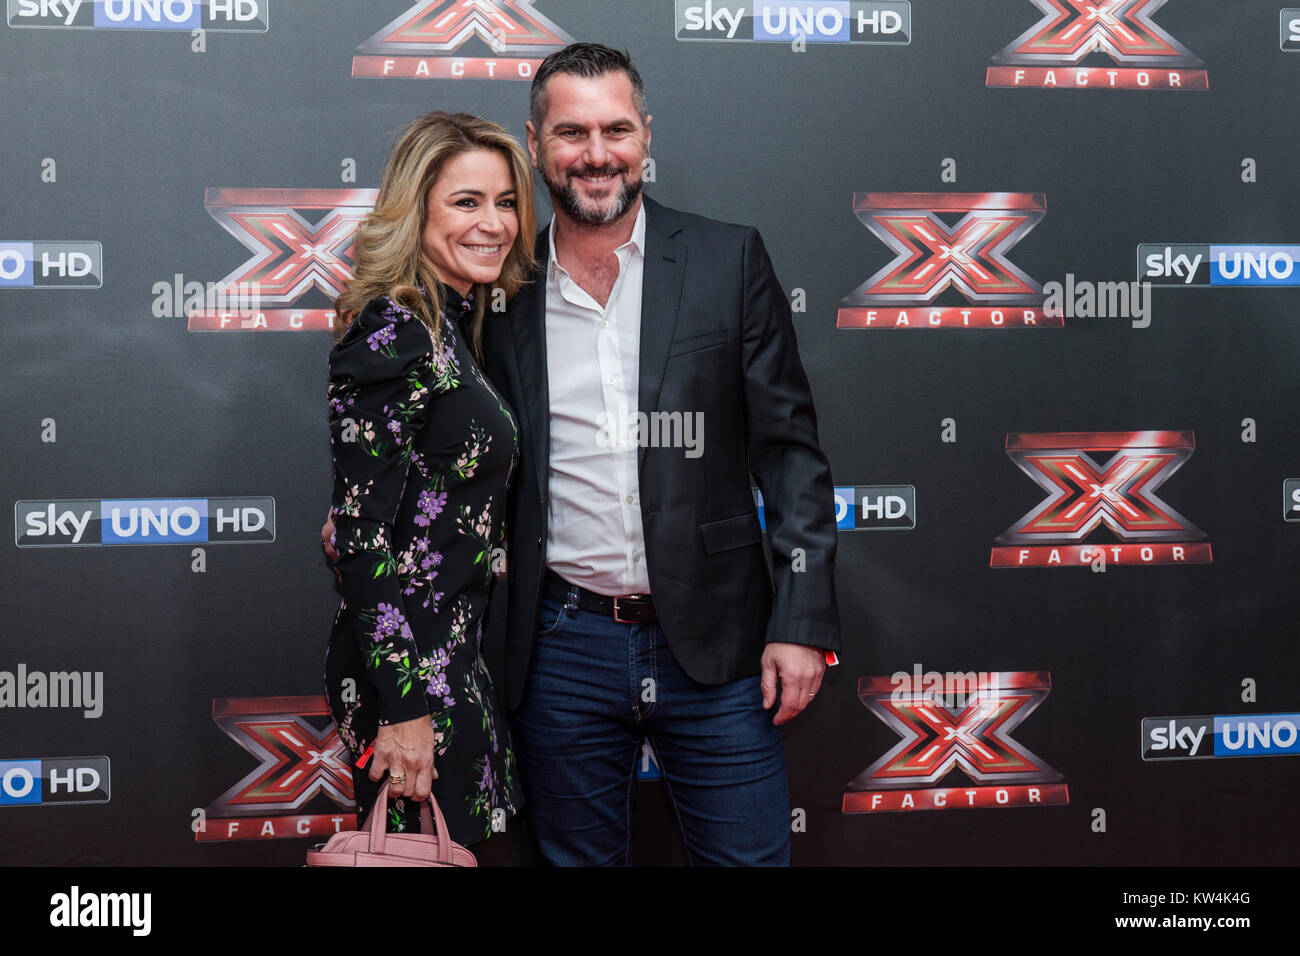 Milan, Italy. 14th Dec, 2017. Carlo Vanzini attending the red carpet of the X Factor 11 Finale Credit: Valeria Portinari/Pacific Press/Alamy Live News Stock Photo